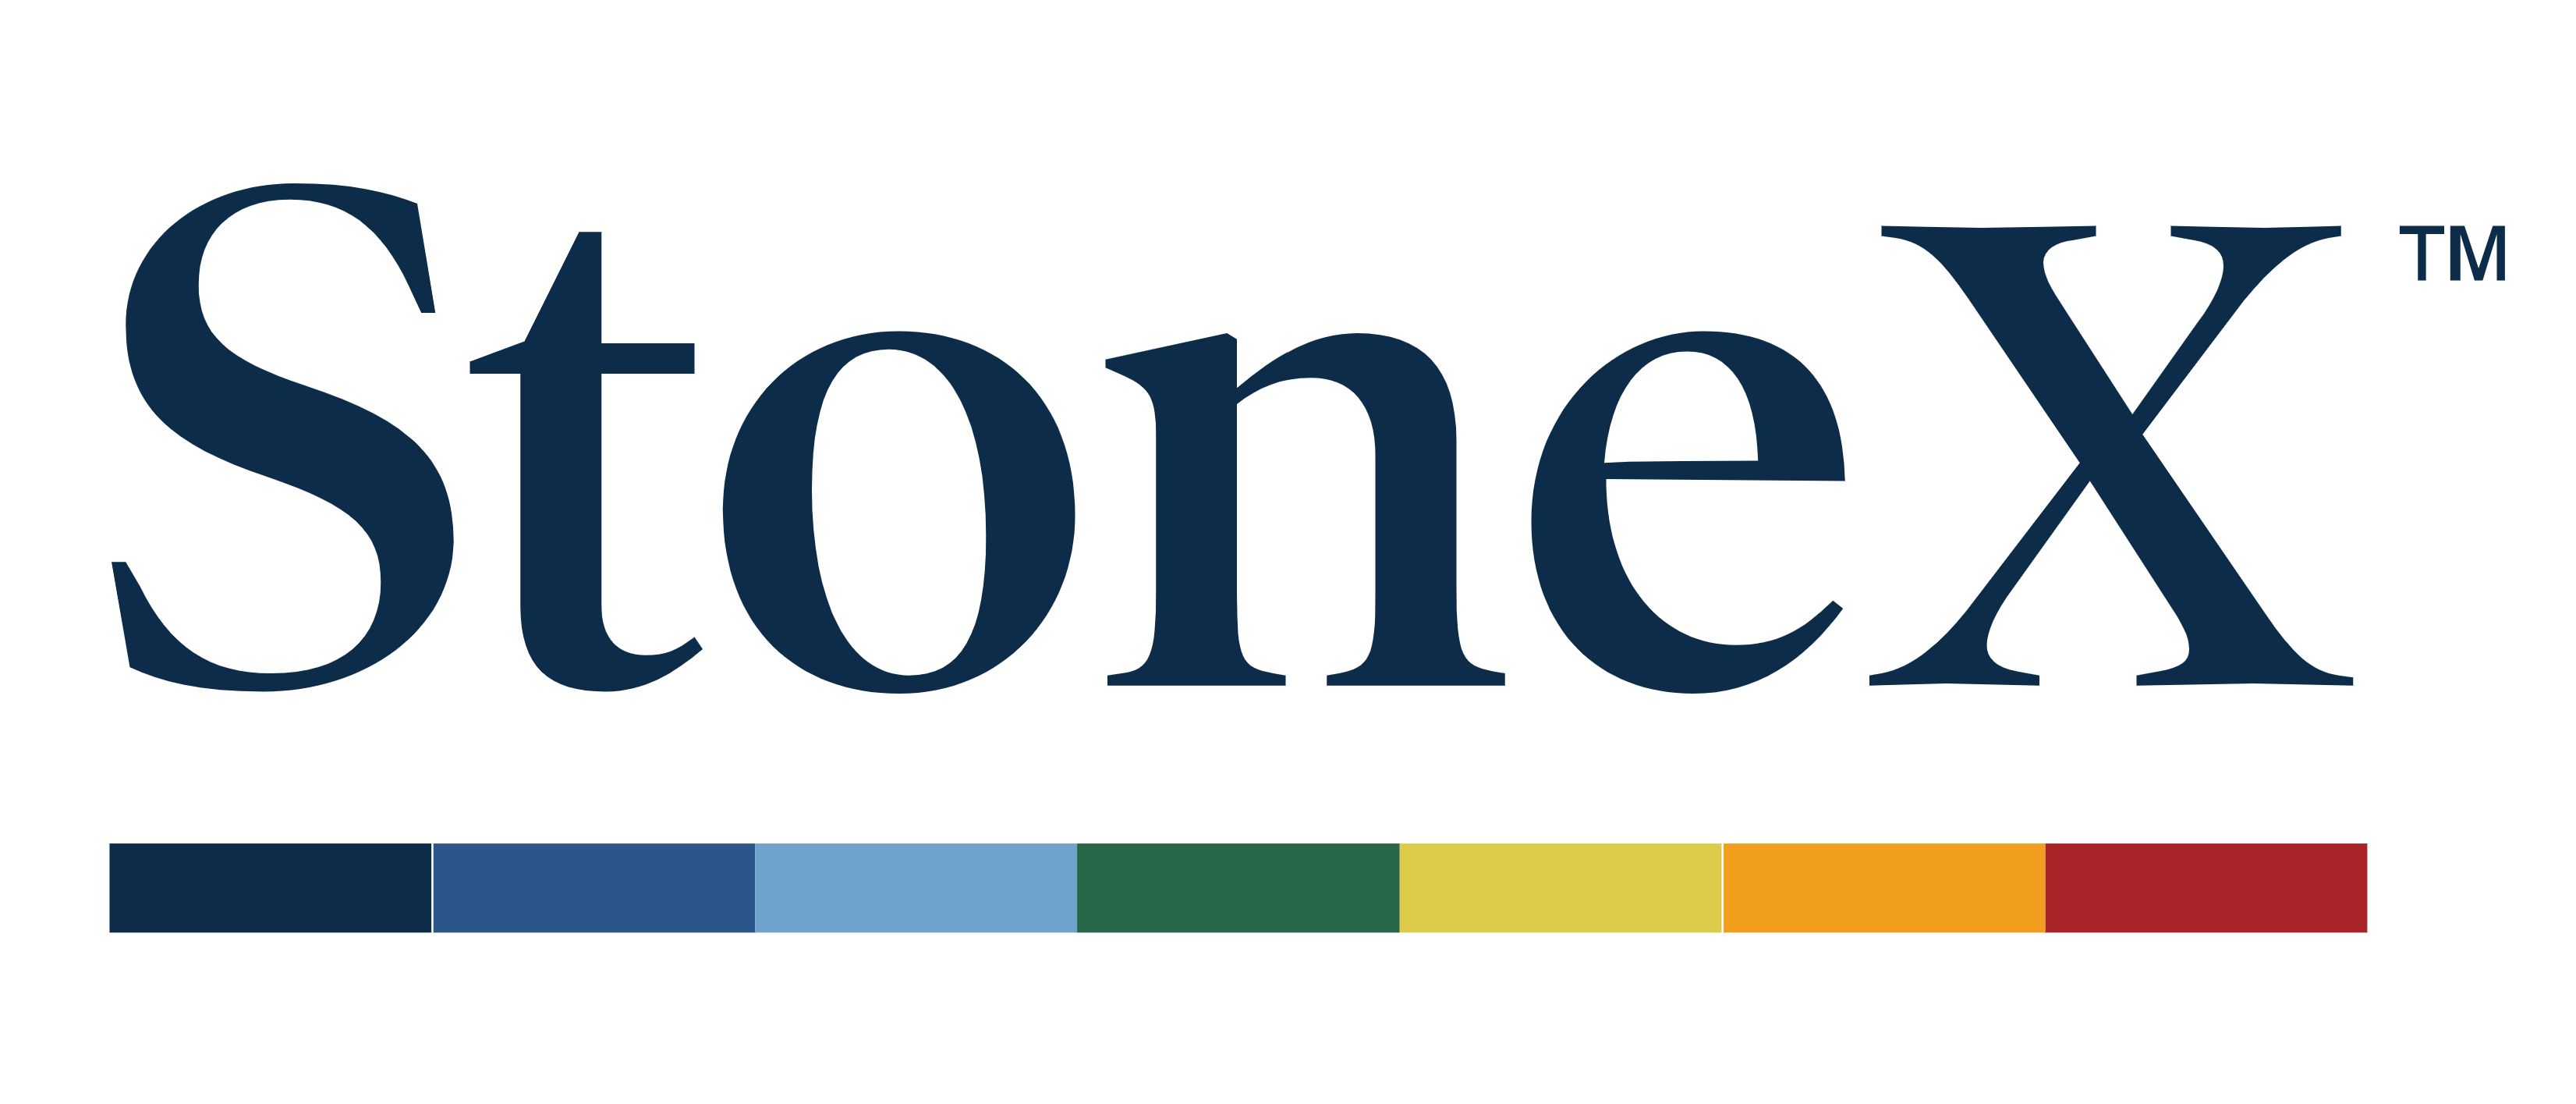 stonex logo